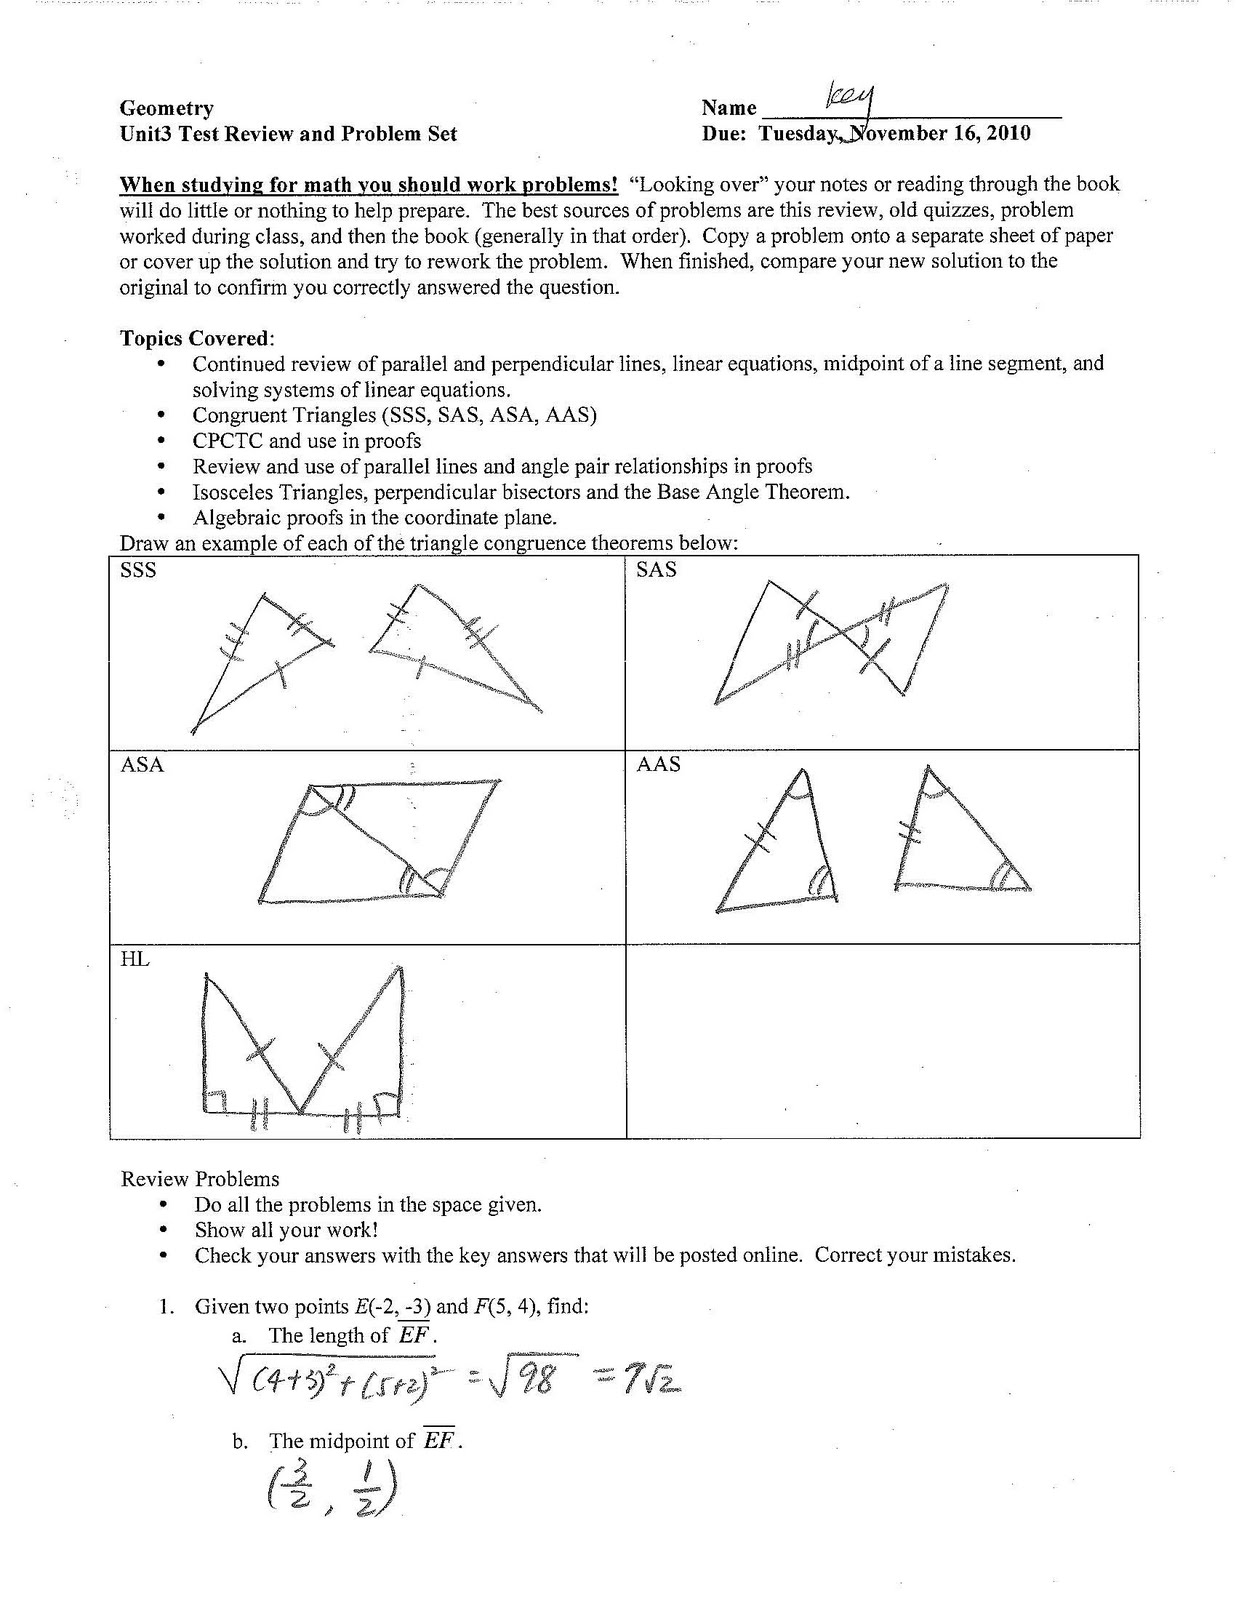 Jiazhen's Geometry: Unit3 Chapter Test Review Sheet Answer! 